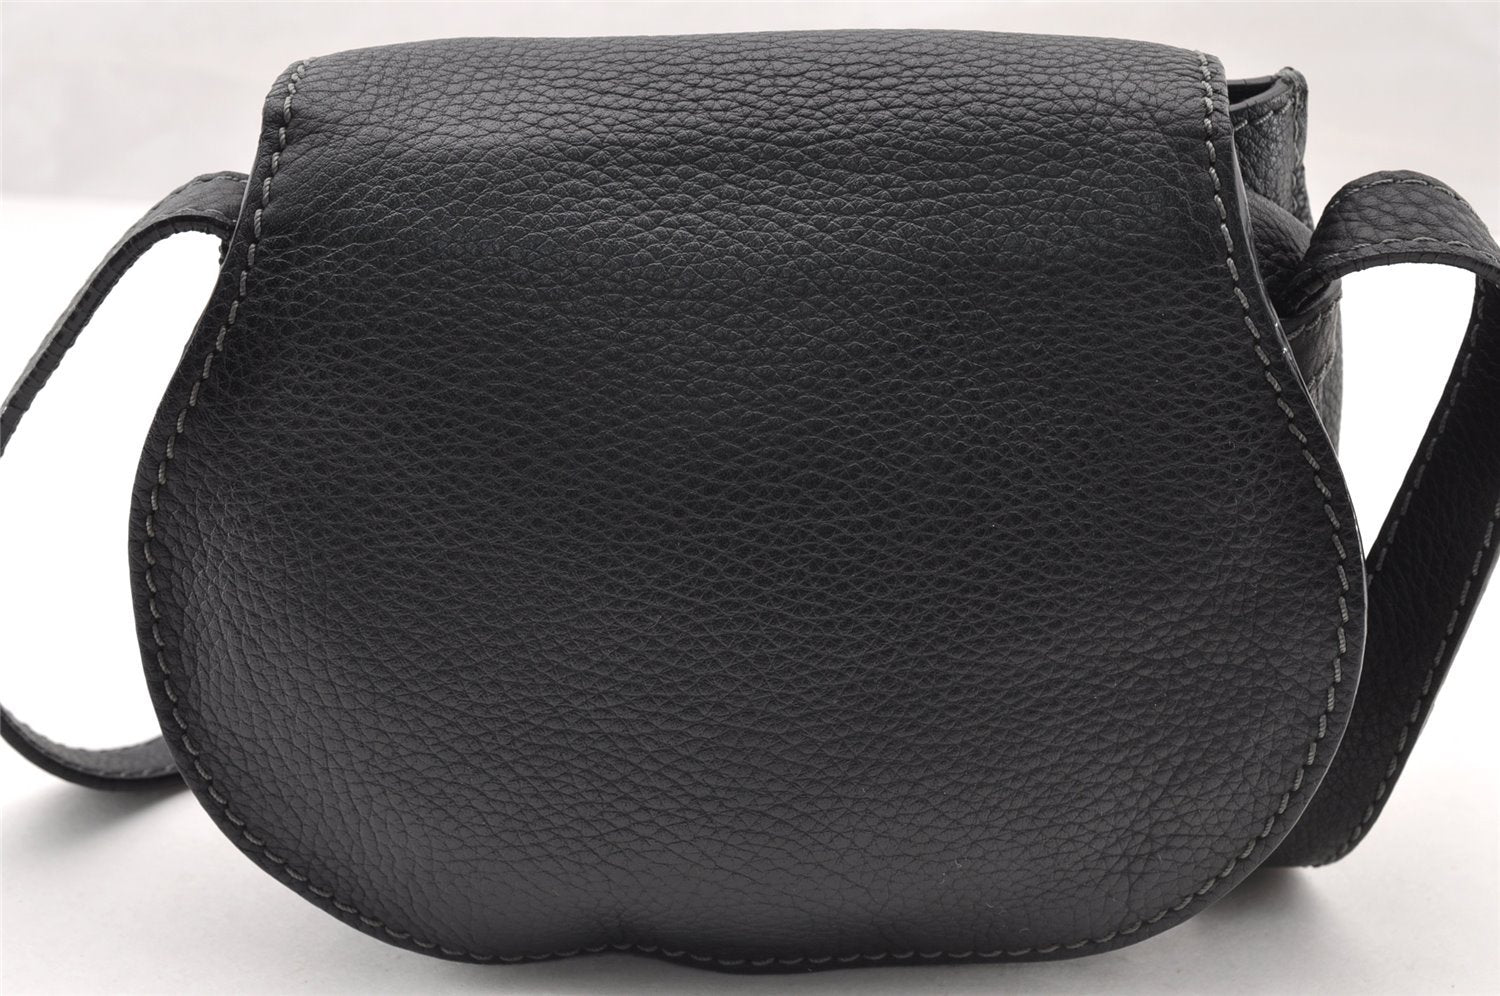 Authentic Chloe Mercie Vintage Leather Shoulder Cross Body Bag Purse Black 8372I